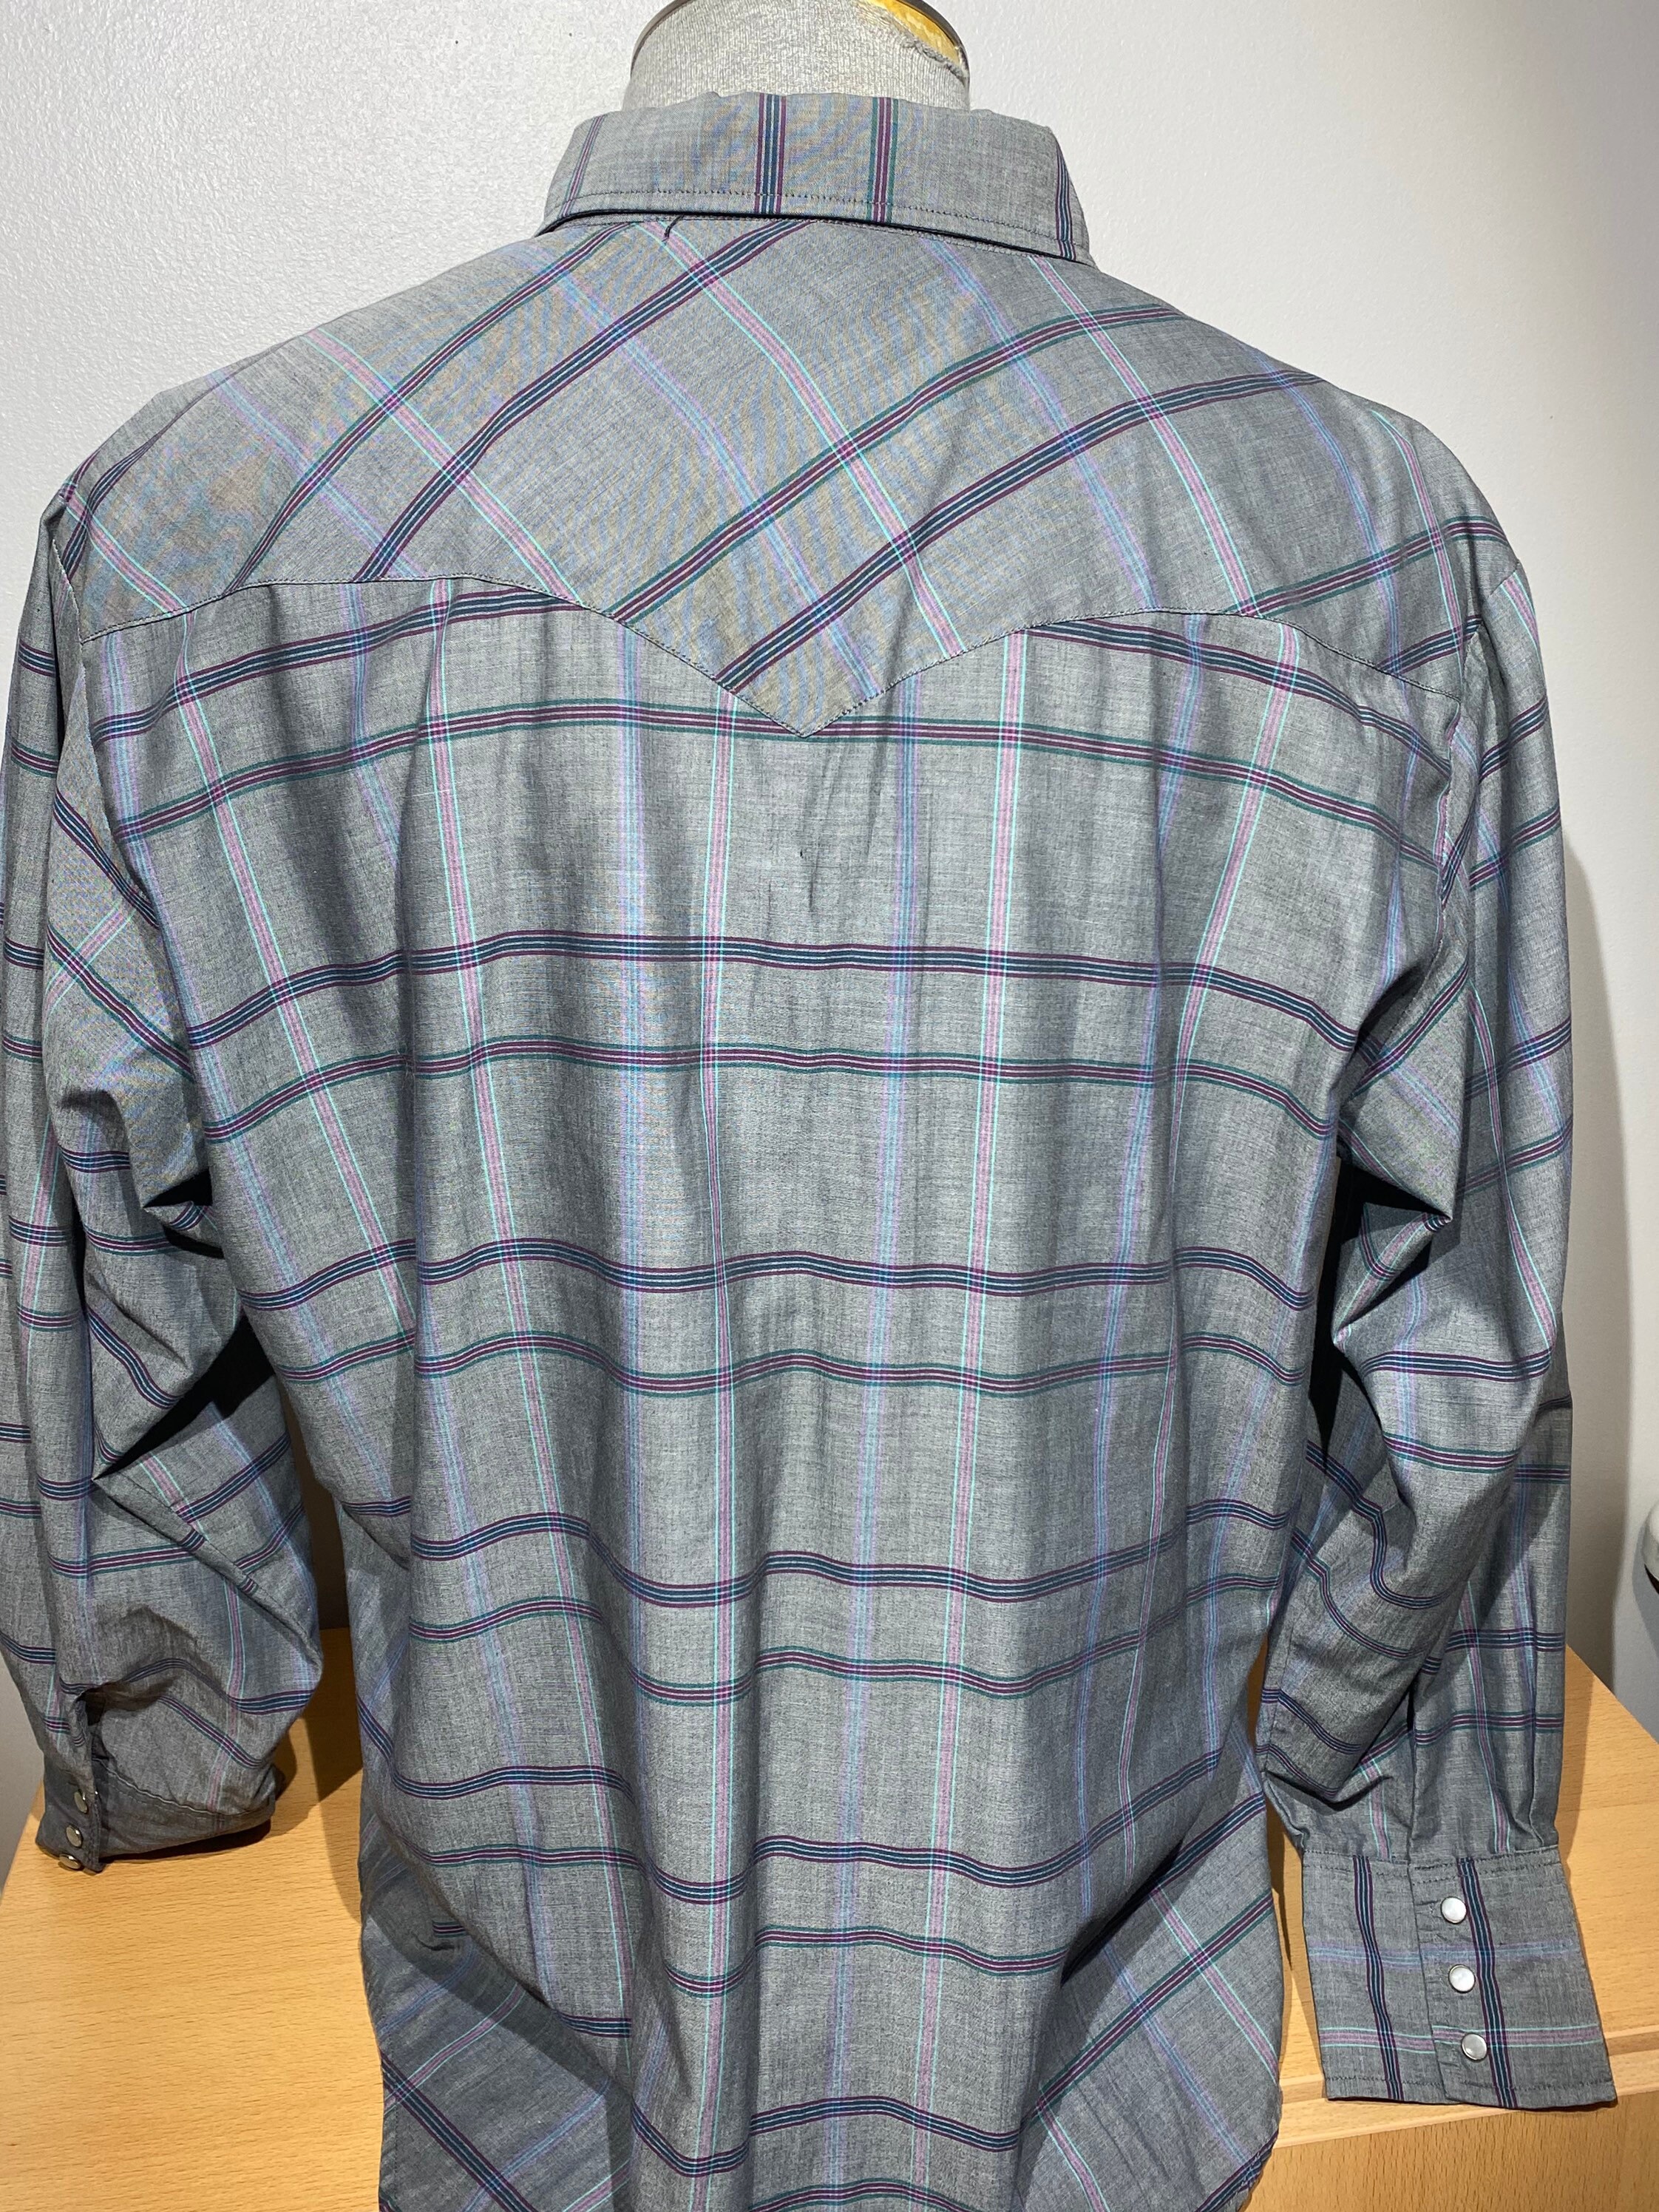 Kleding Gender-neutrale kleding volwassenen Tops & T-shirts Oxfords Vintage jaren '70 80 Bar M Rancher XL Western Pearl Snap Rockabilly Grey Purple Cowboy Shirt 